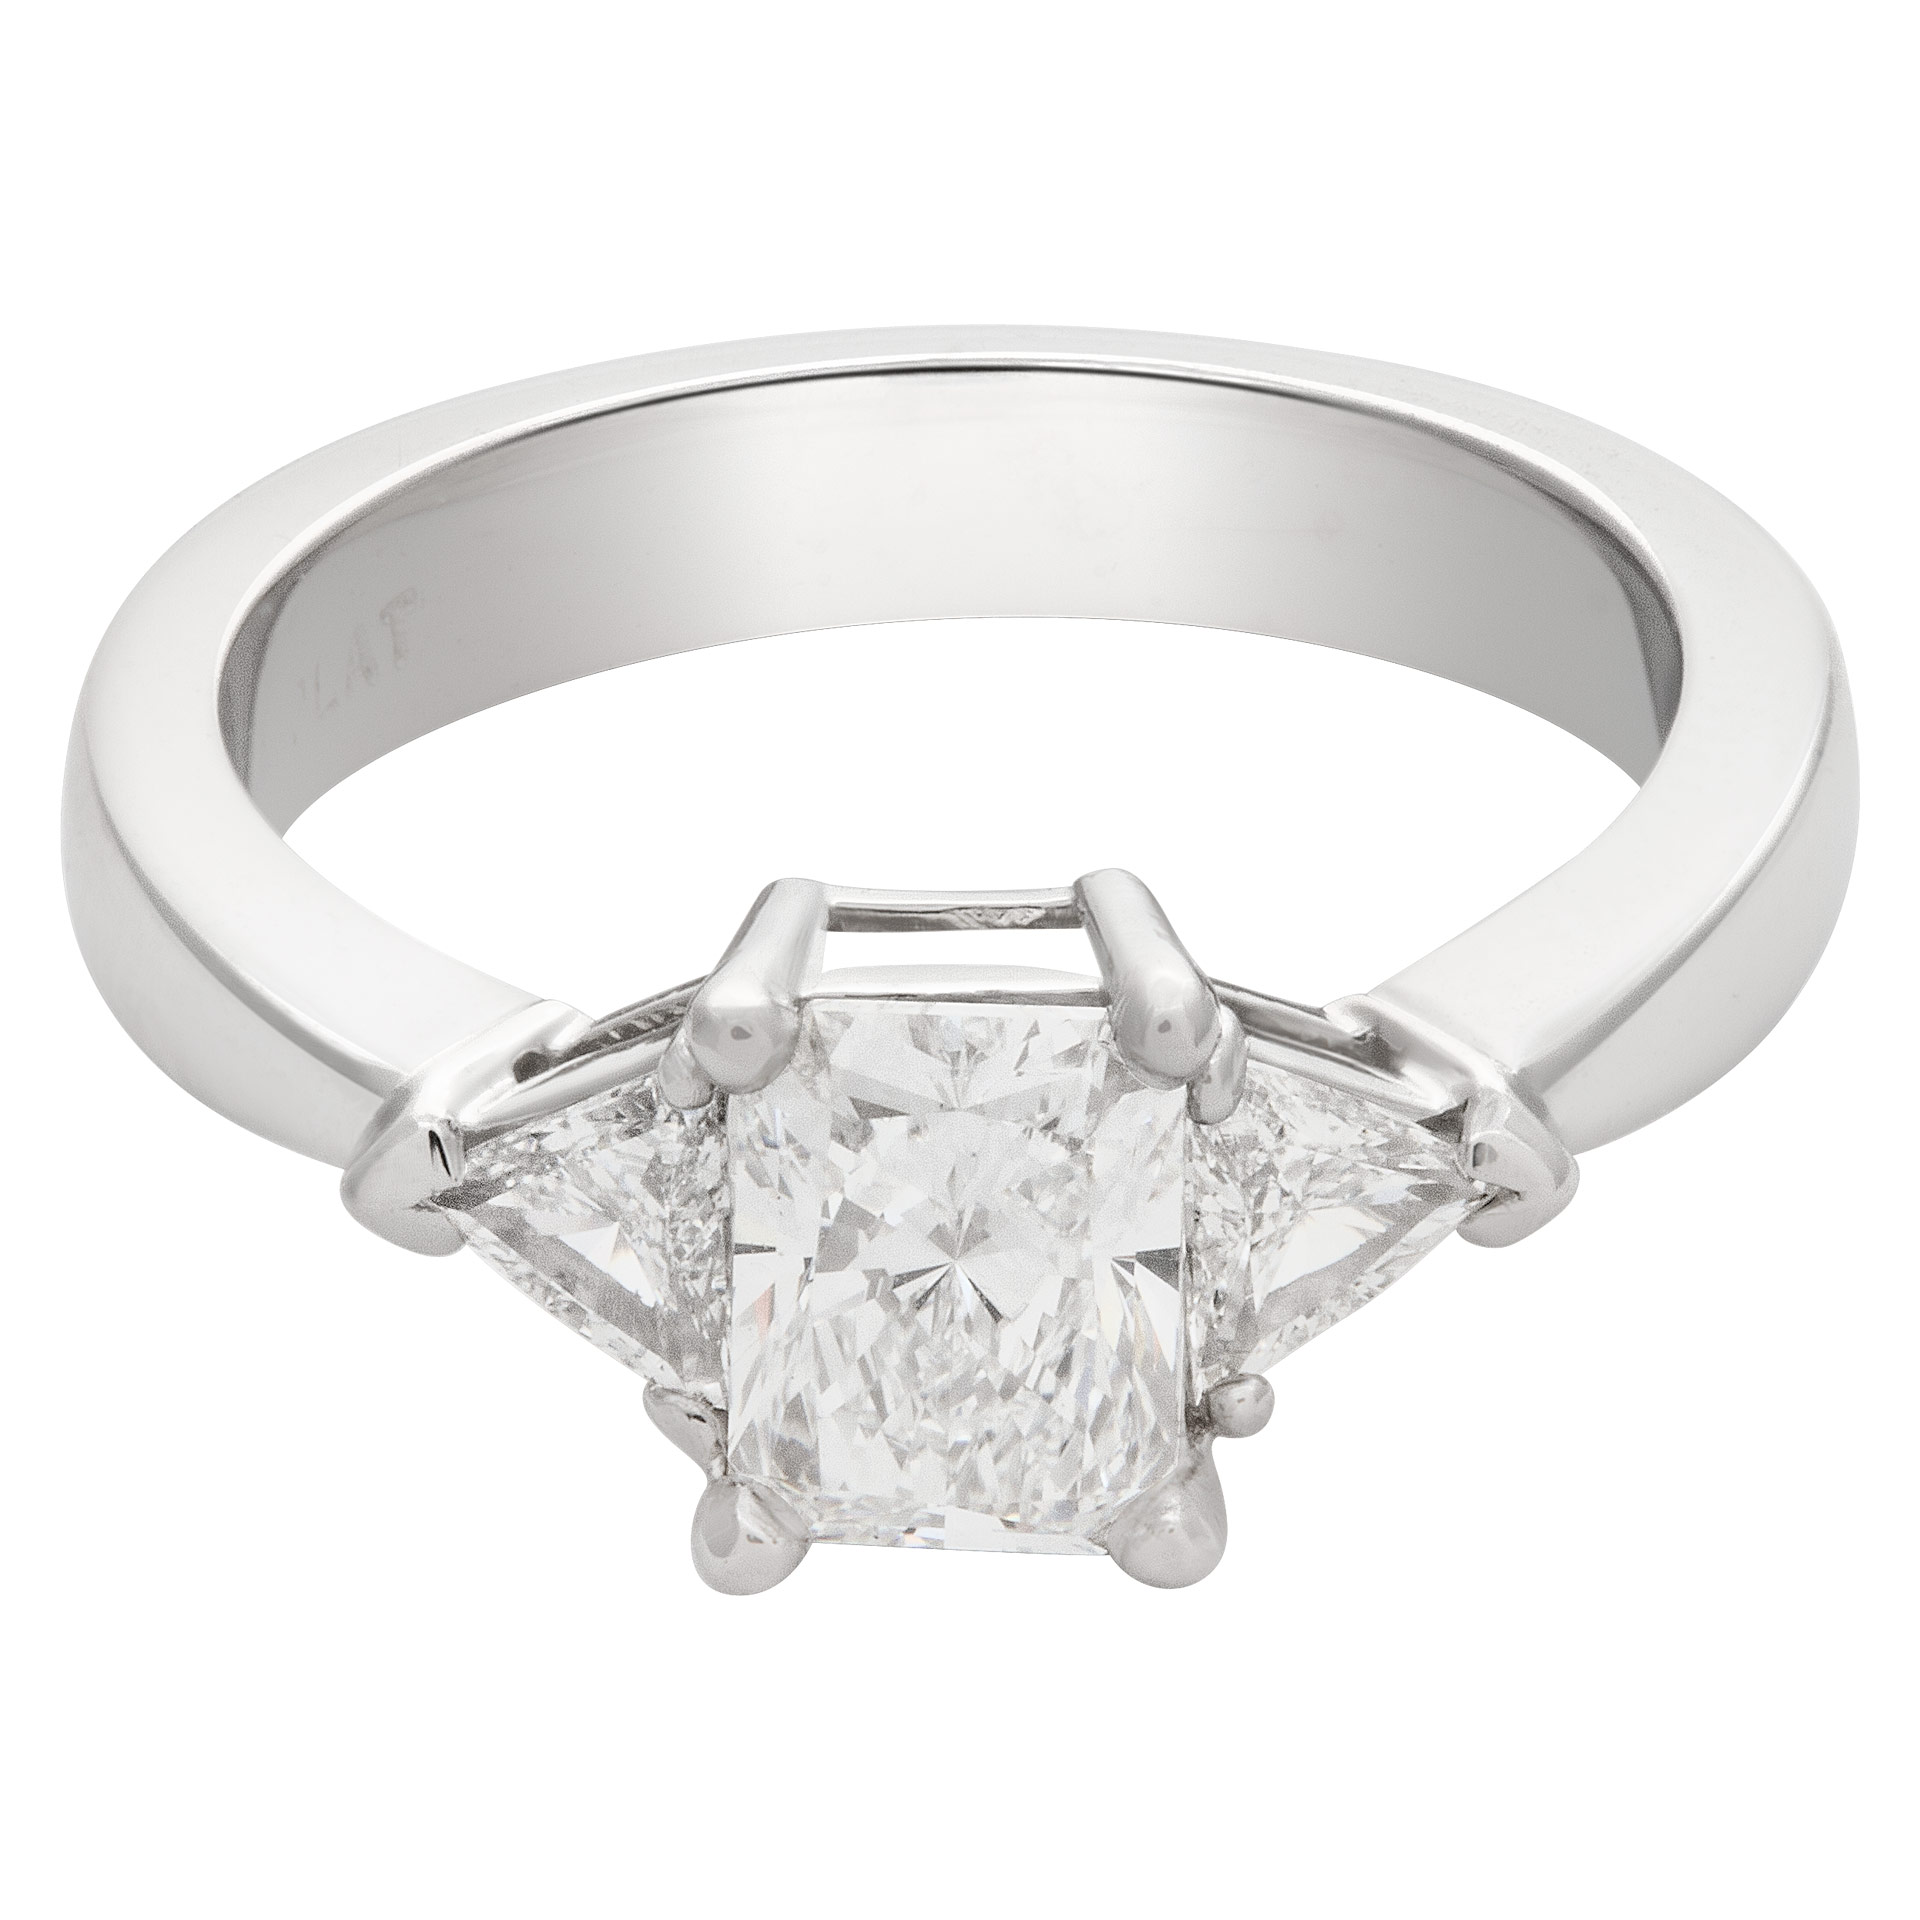 GIA certified cut-cornered rectangular modified brilliant diamond 1 carat (F color, VS2 clarity) ring